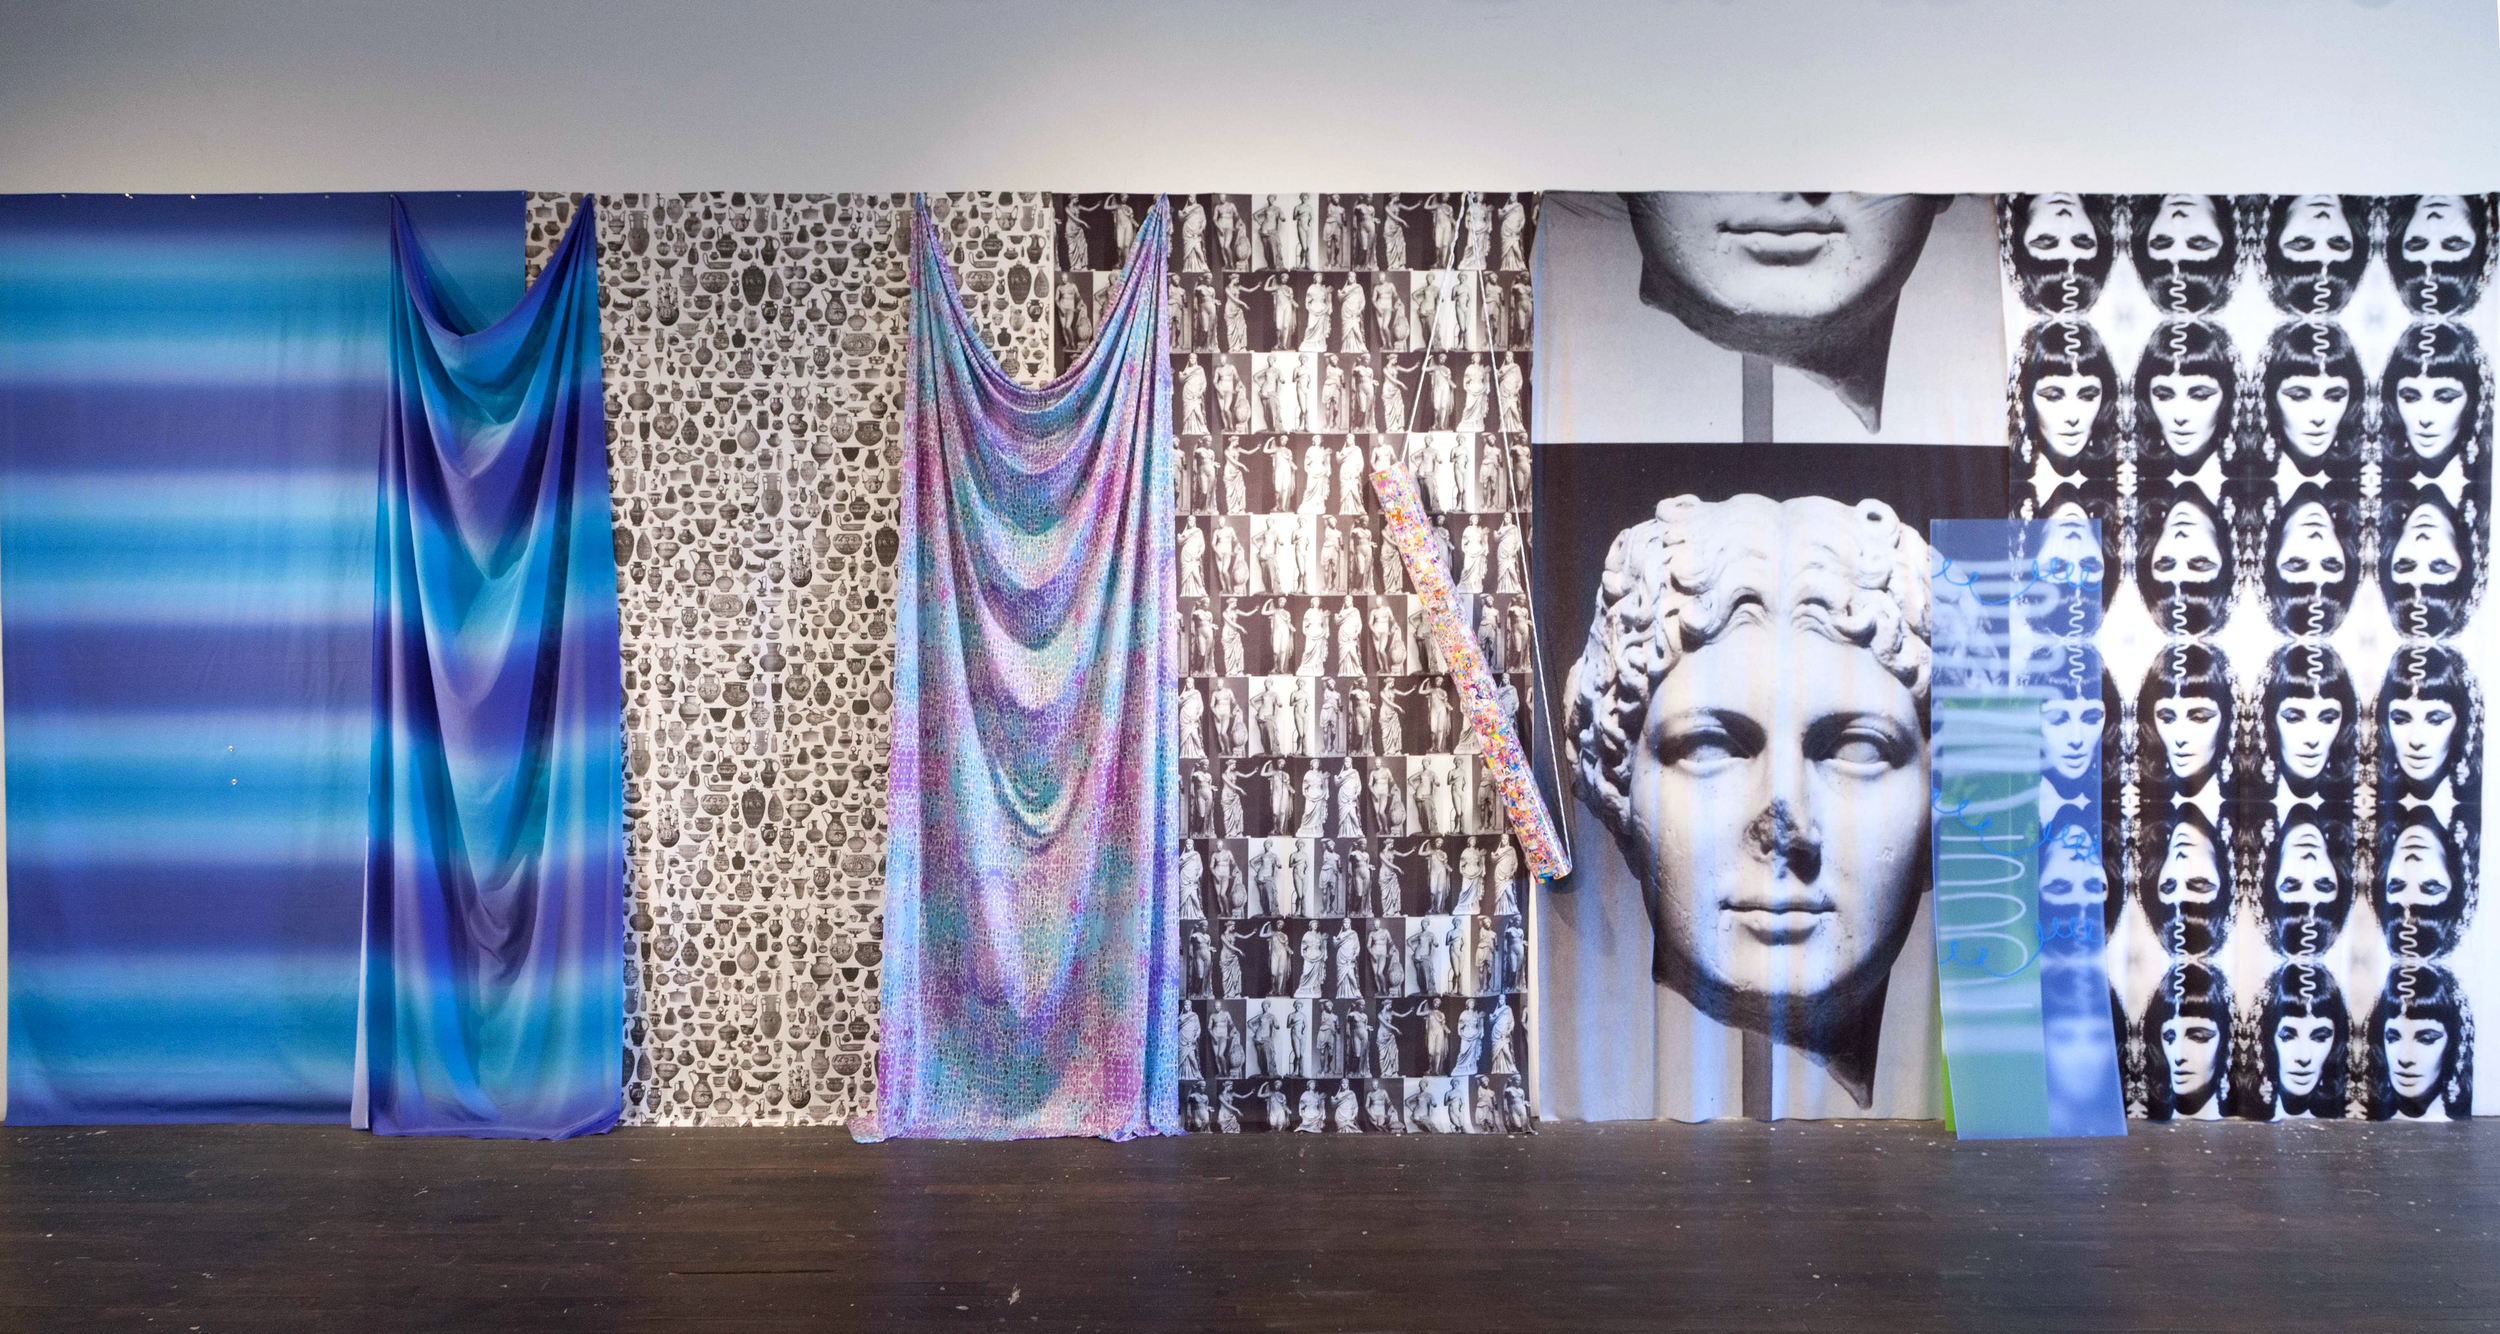 Chasing Waterfalls | printed fabric, Lisa Frank stickers, cardboard tube, rope, screenprints on acrylic sheets | 108"x270"x4" | 2016